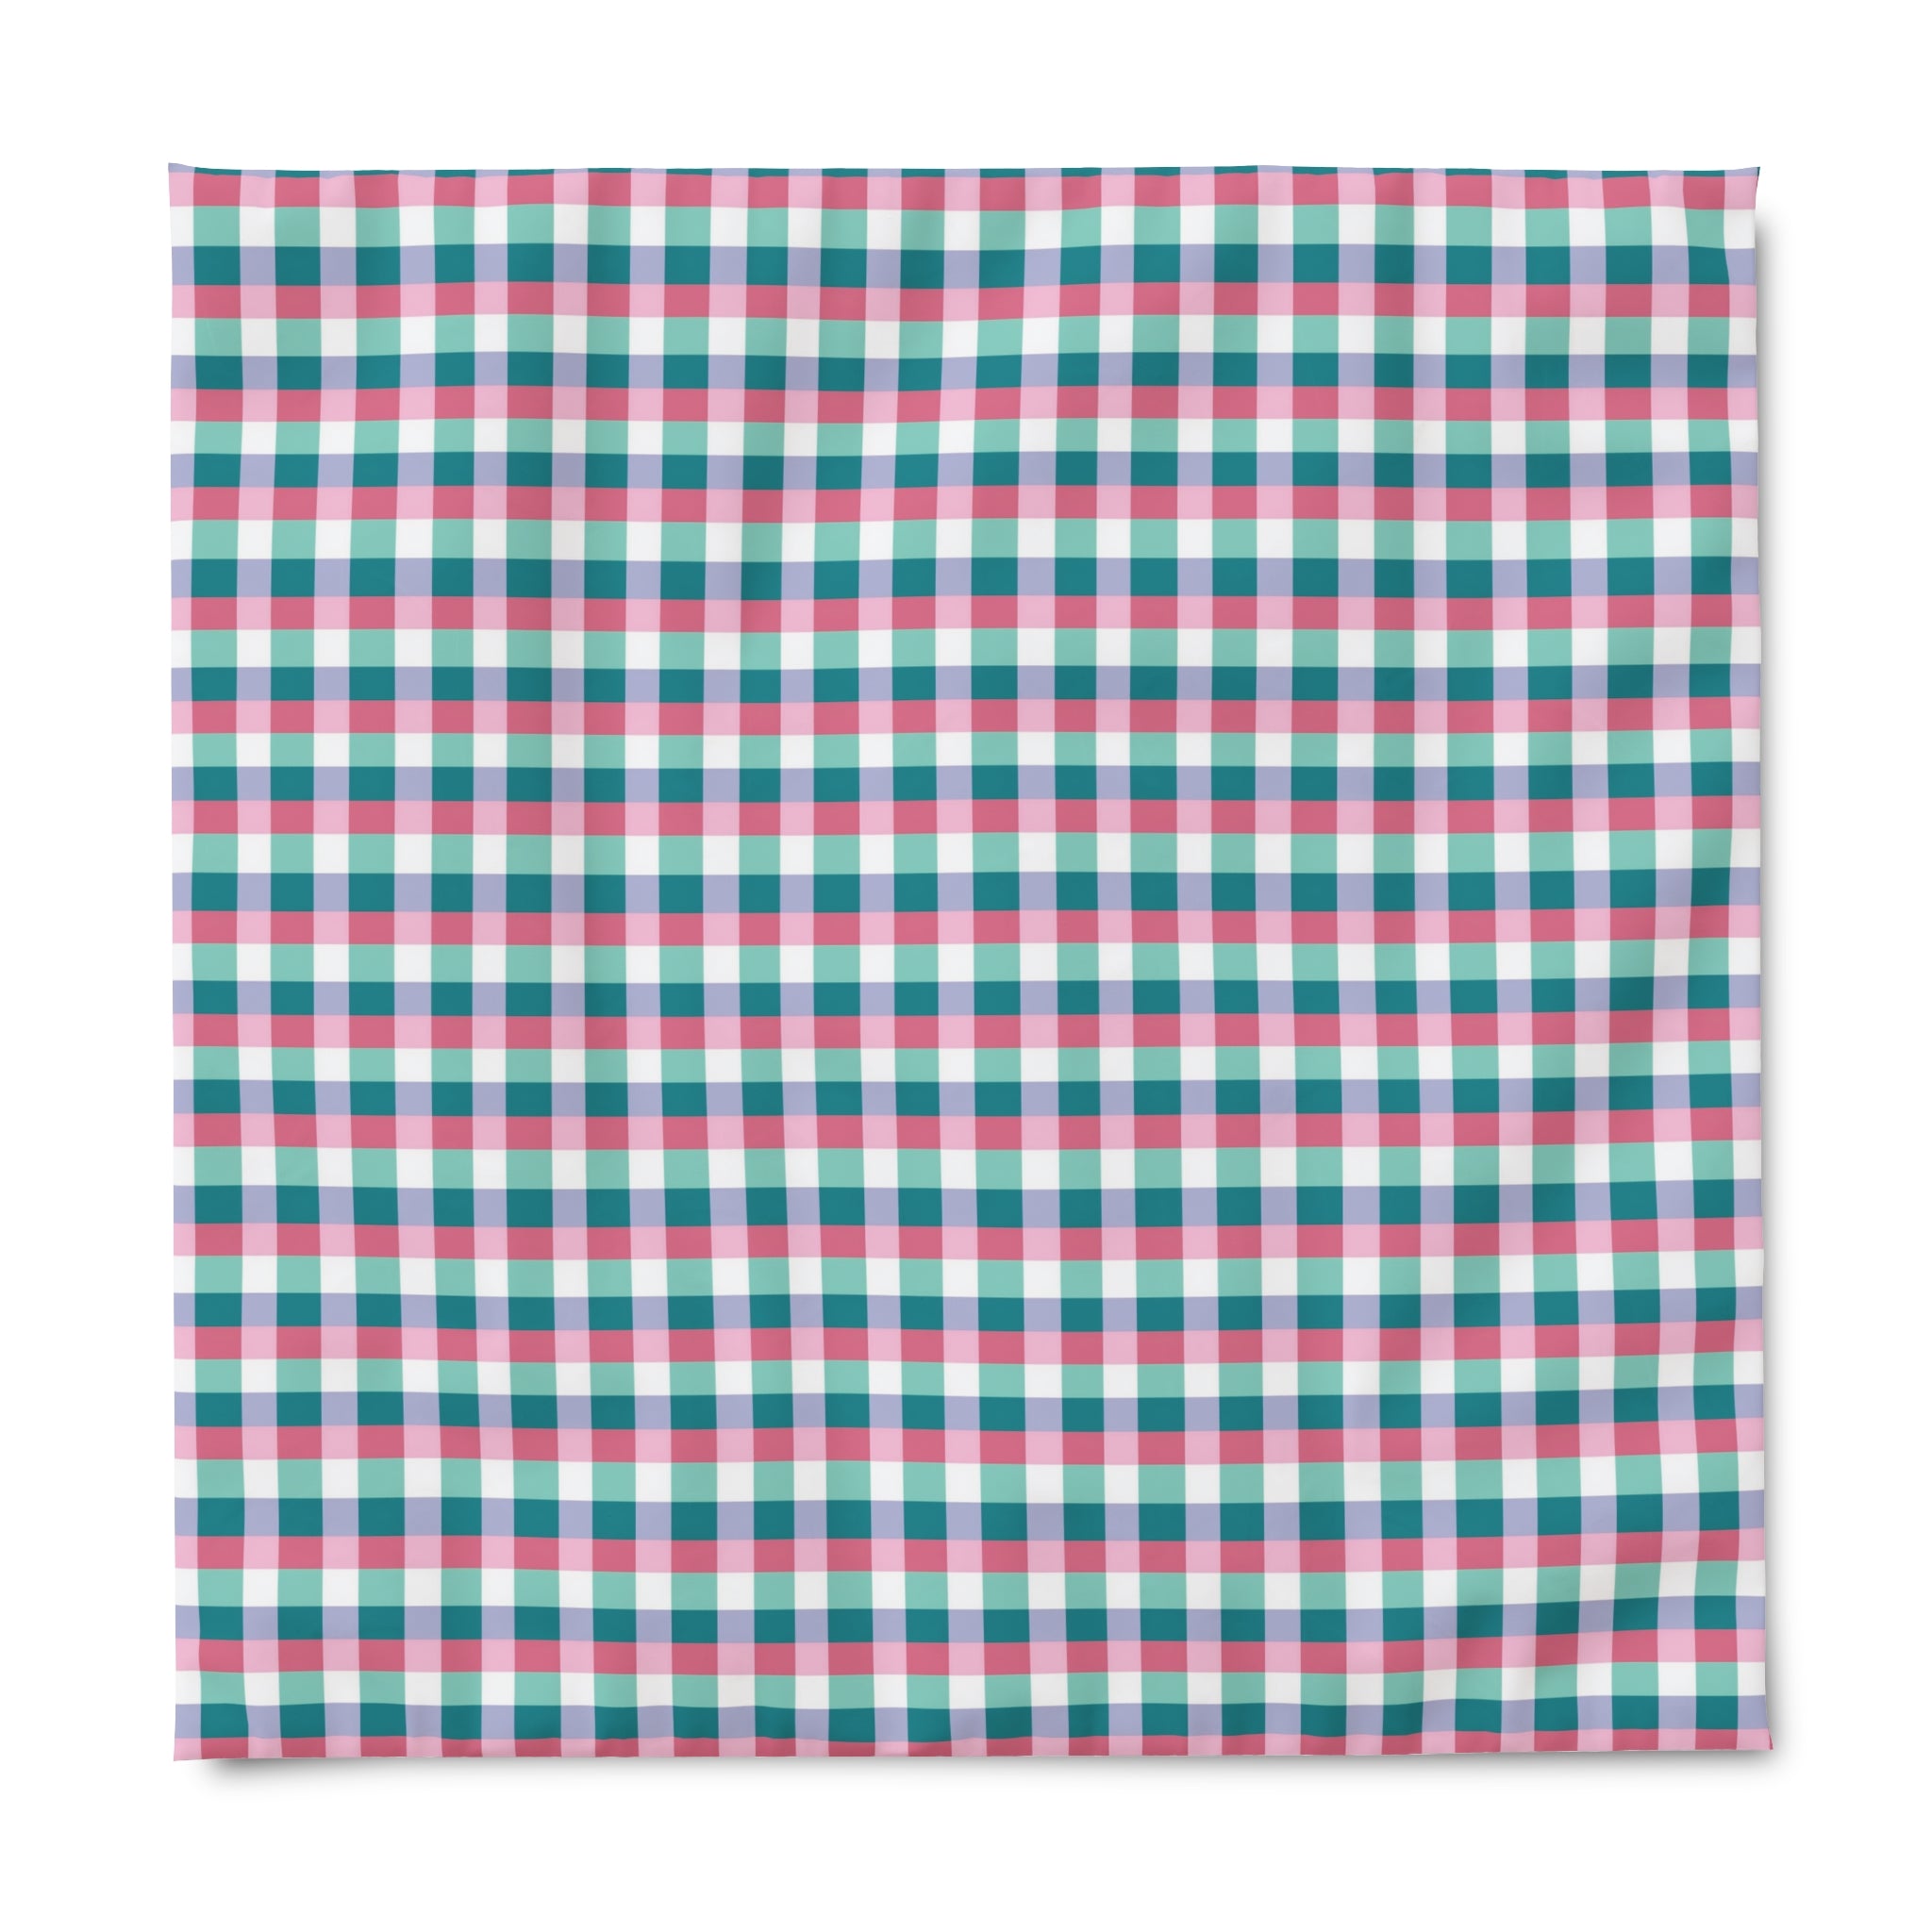 Duvet Cover (AOP) - Checkered Patterns 02